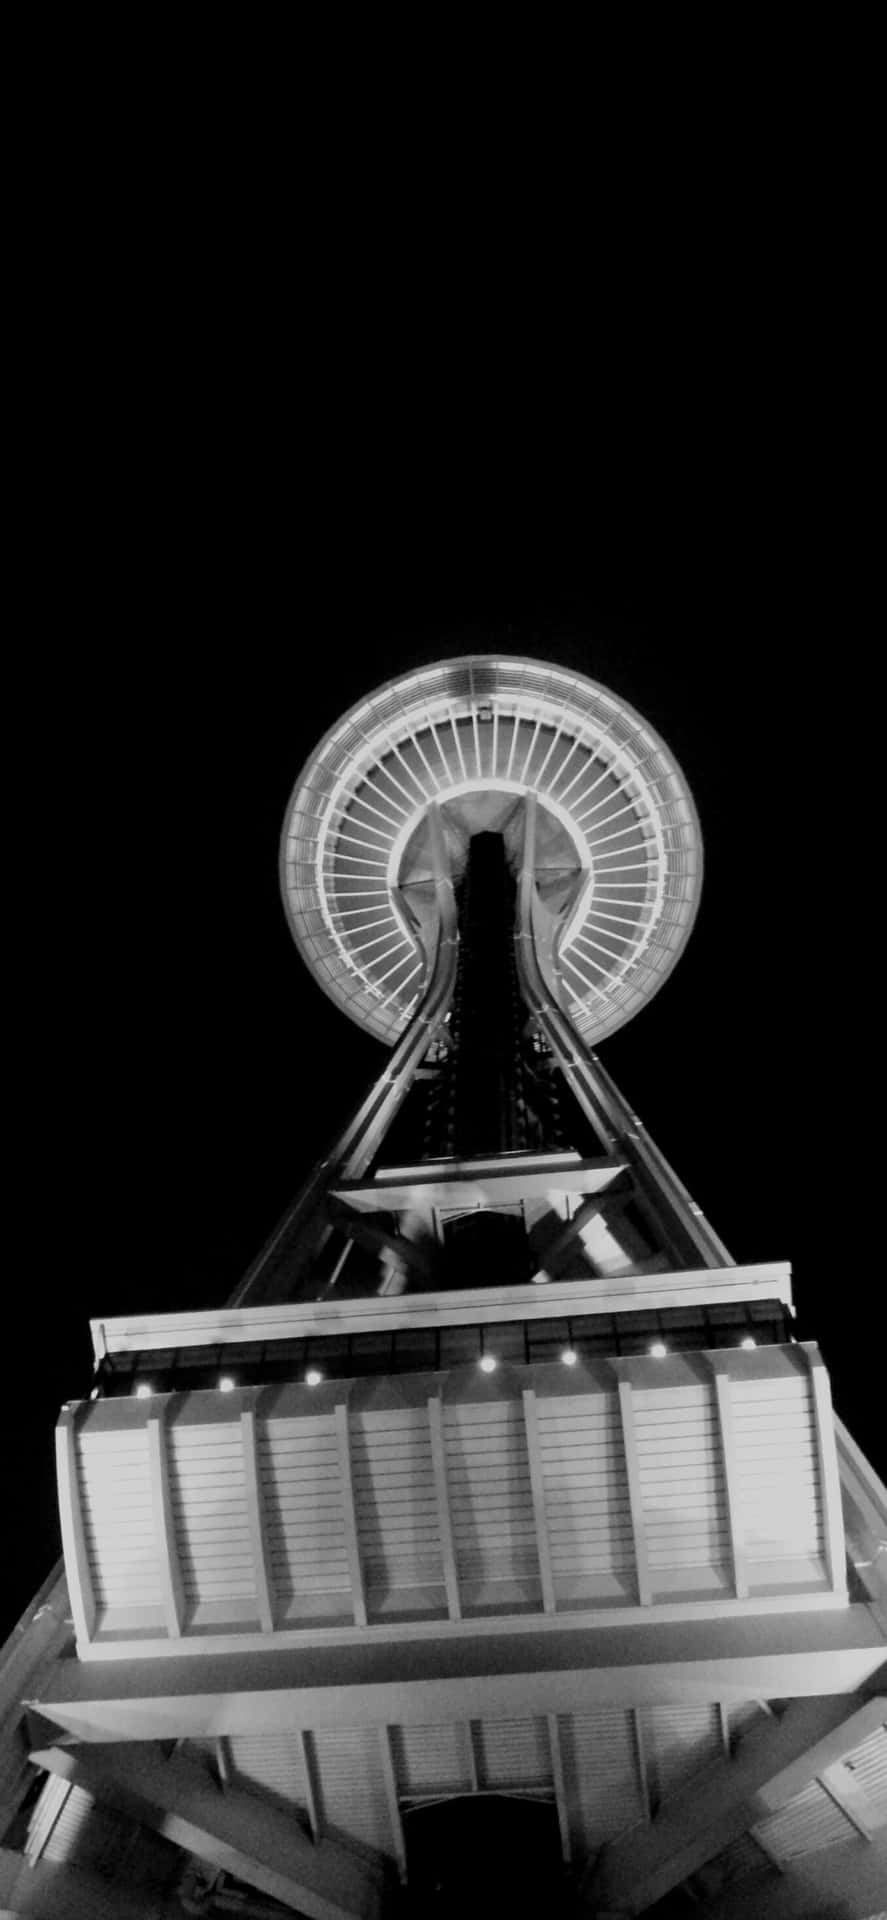 Denvackra Seattle-siluetten Sedd Från Kanten Av Iphone X.